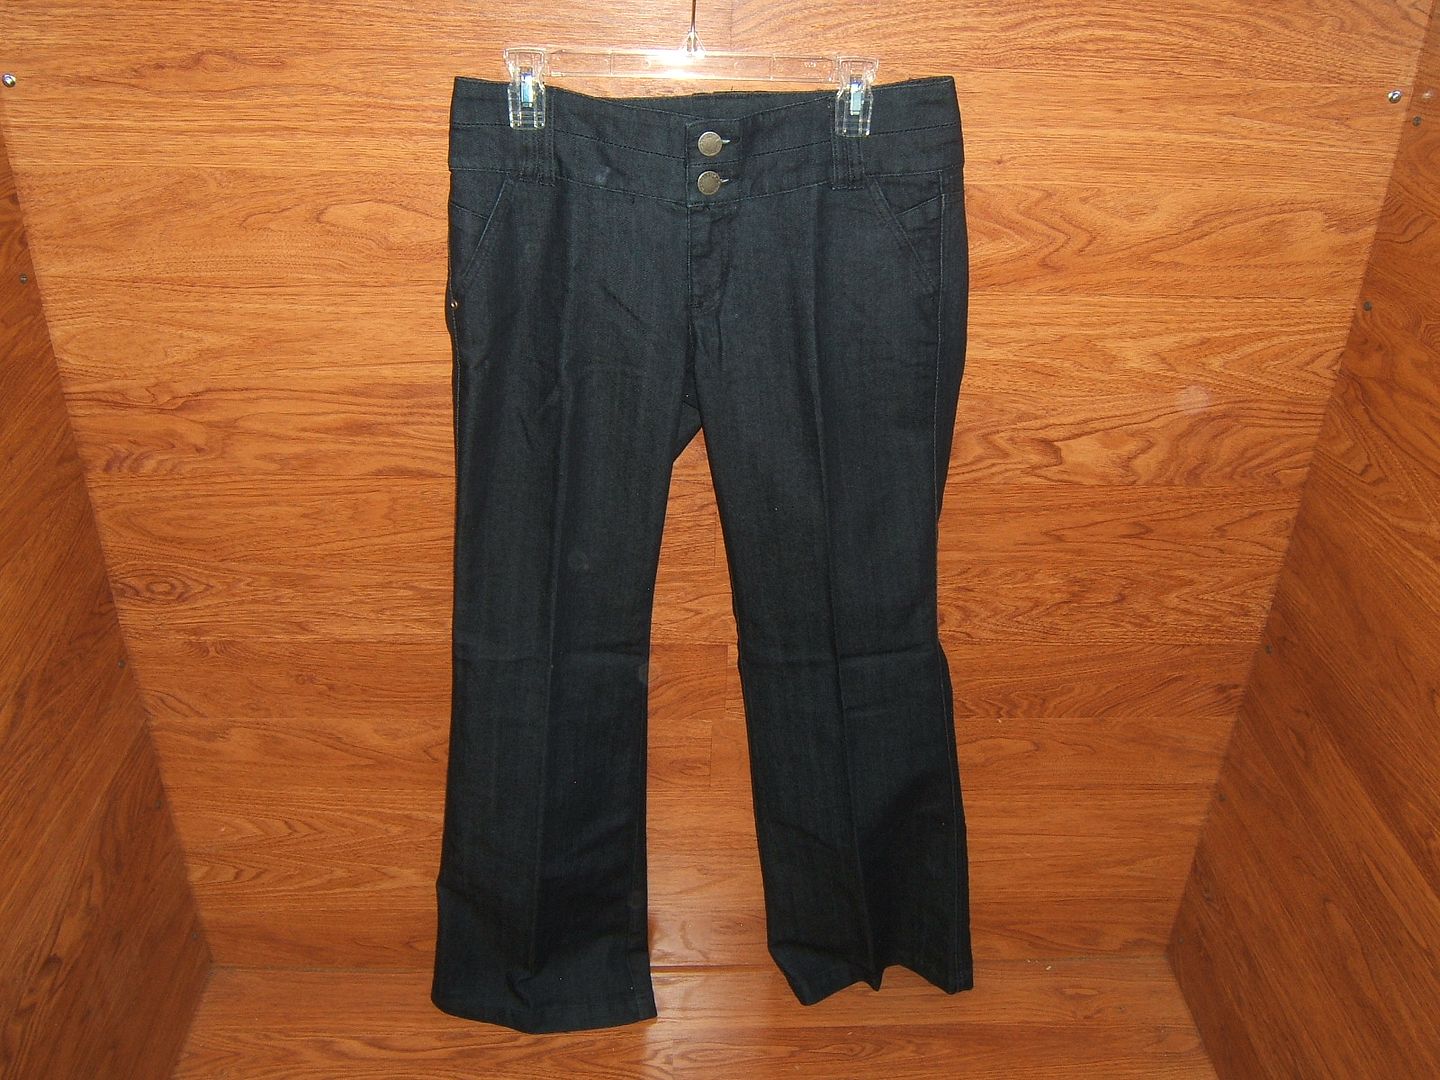 Insider Premium Denim Jeans Wide Leg Female Adult 30 Blues Solid | eBay